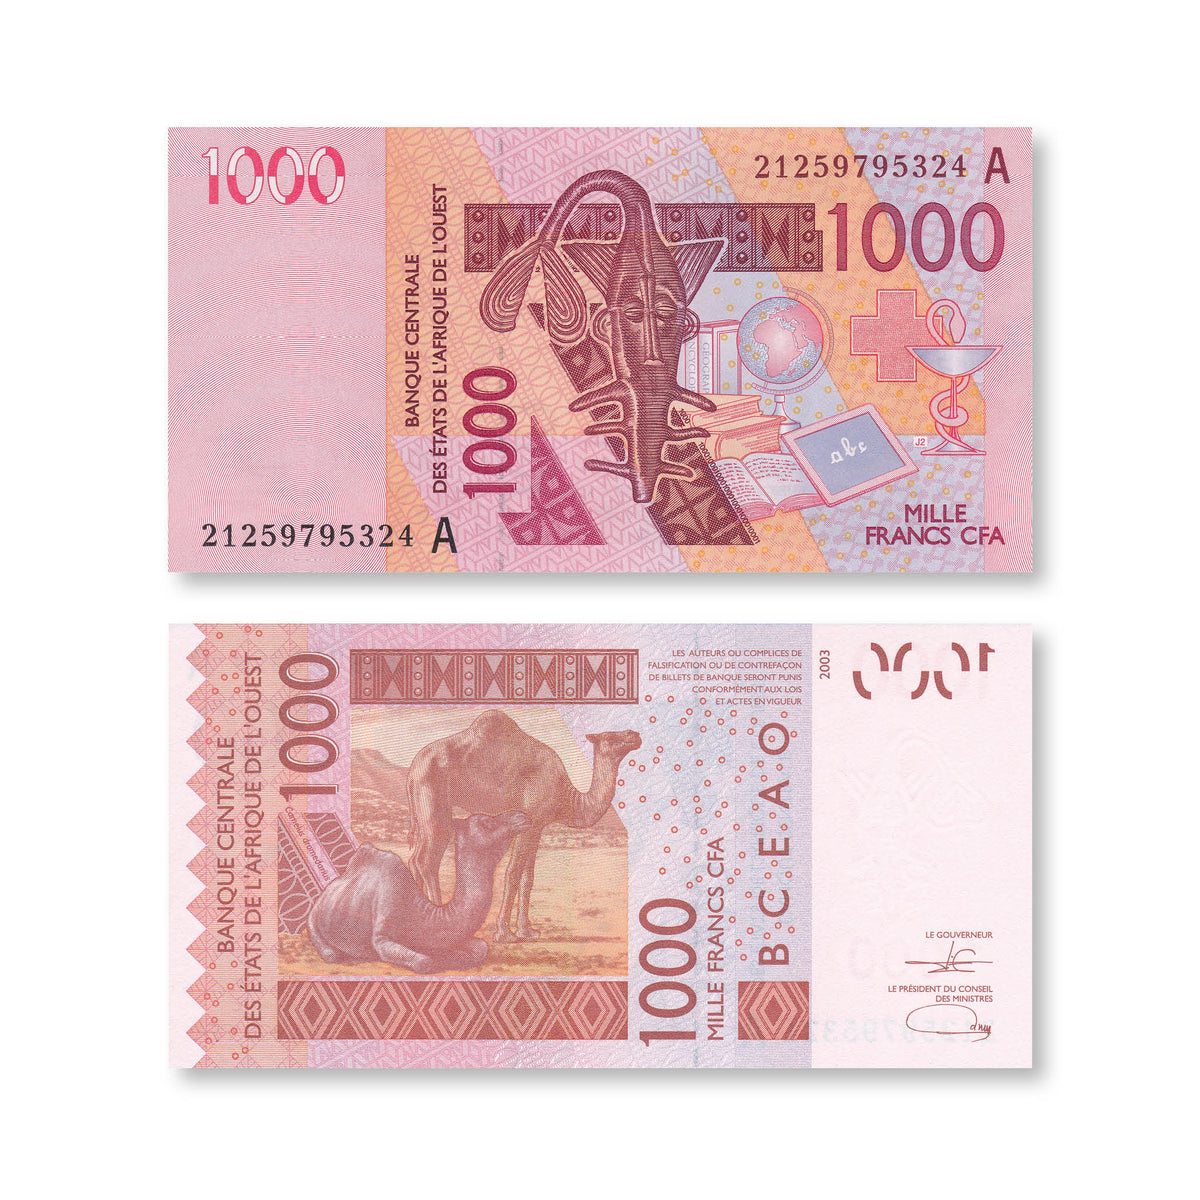 West African States, Ivory Coast, 1000 Francs, 2021, B121Au, P115A, UNC - Robert's World Money - World Banknotes